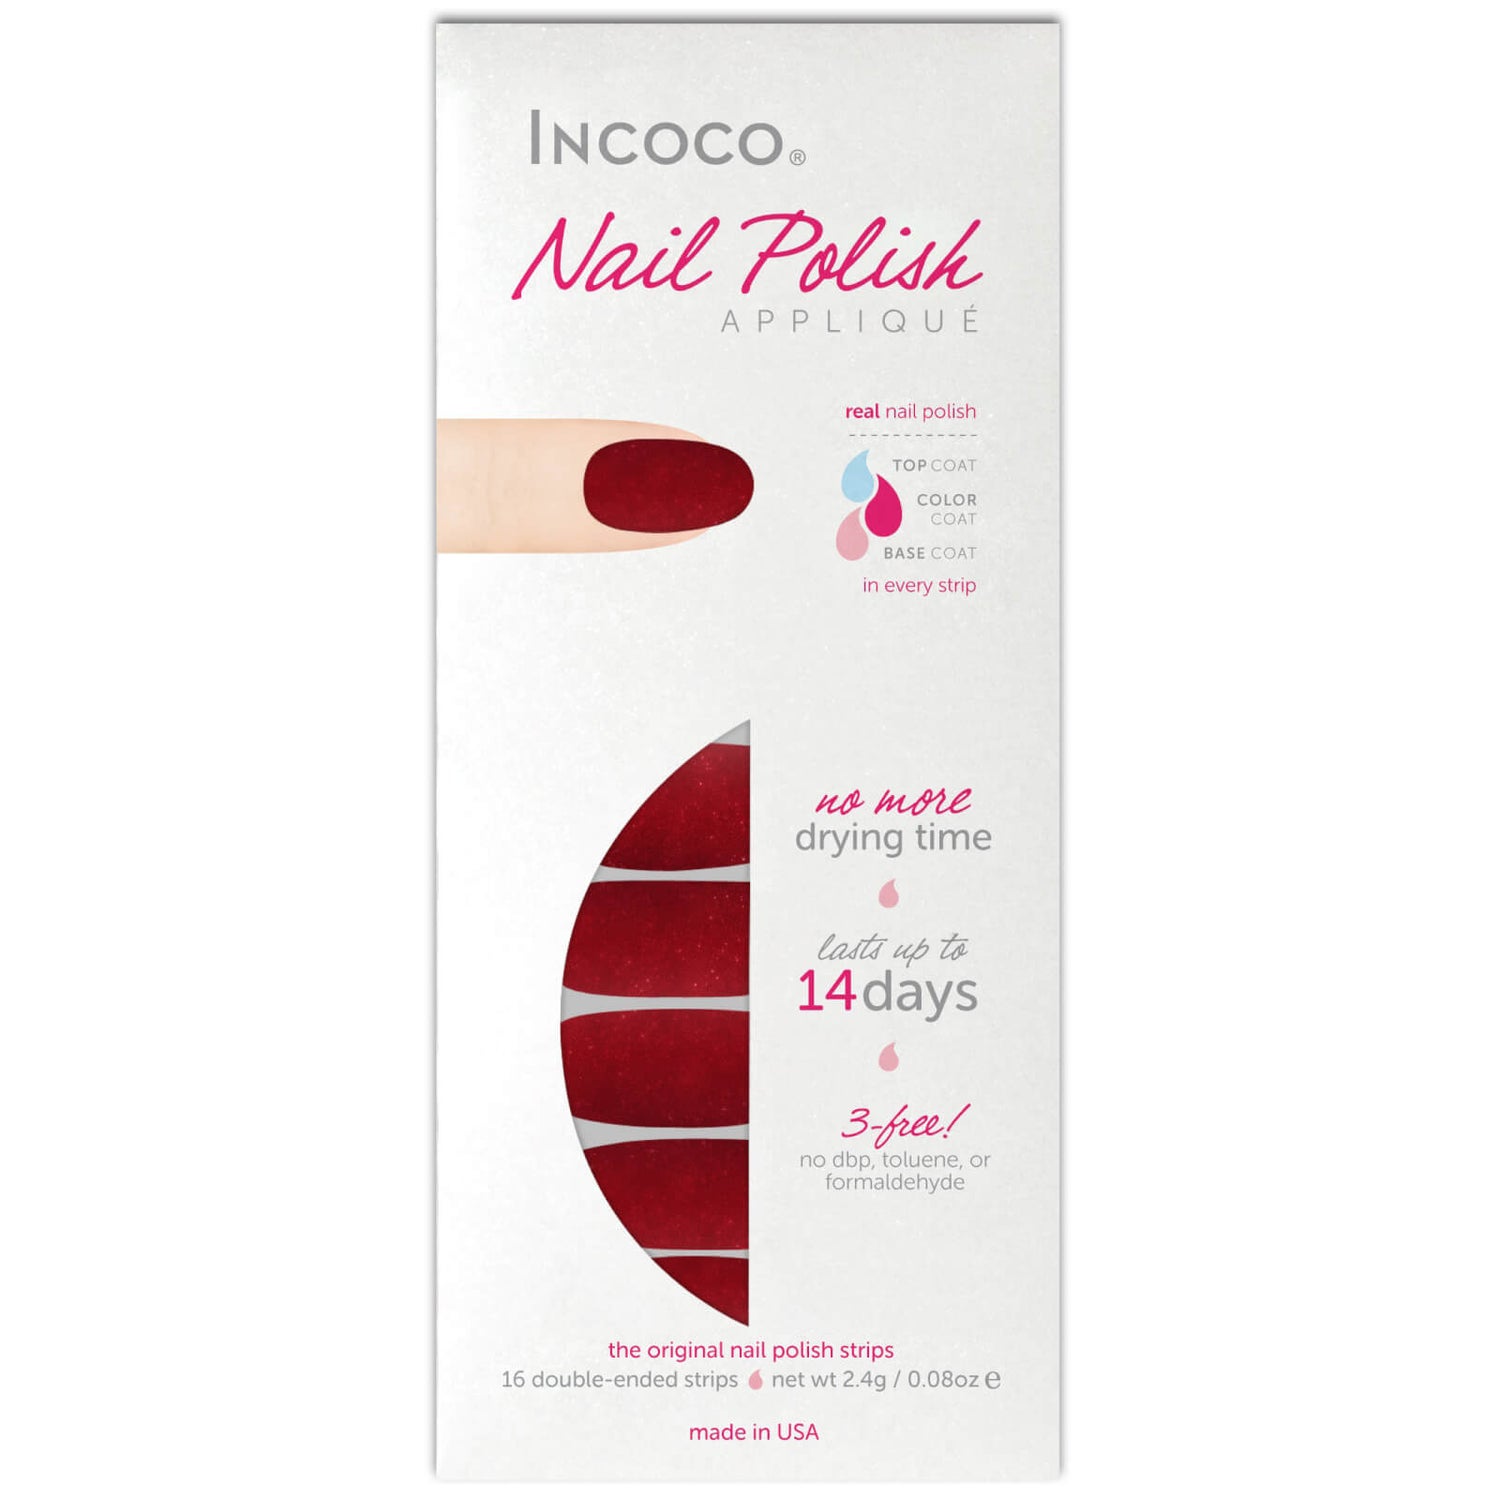 Incoco Nail Polish Appliqué - Solid Colors | GLOSSYBOX US